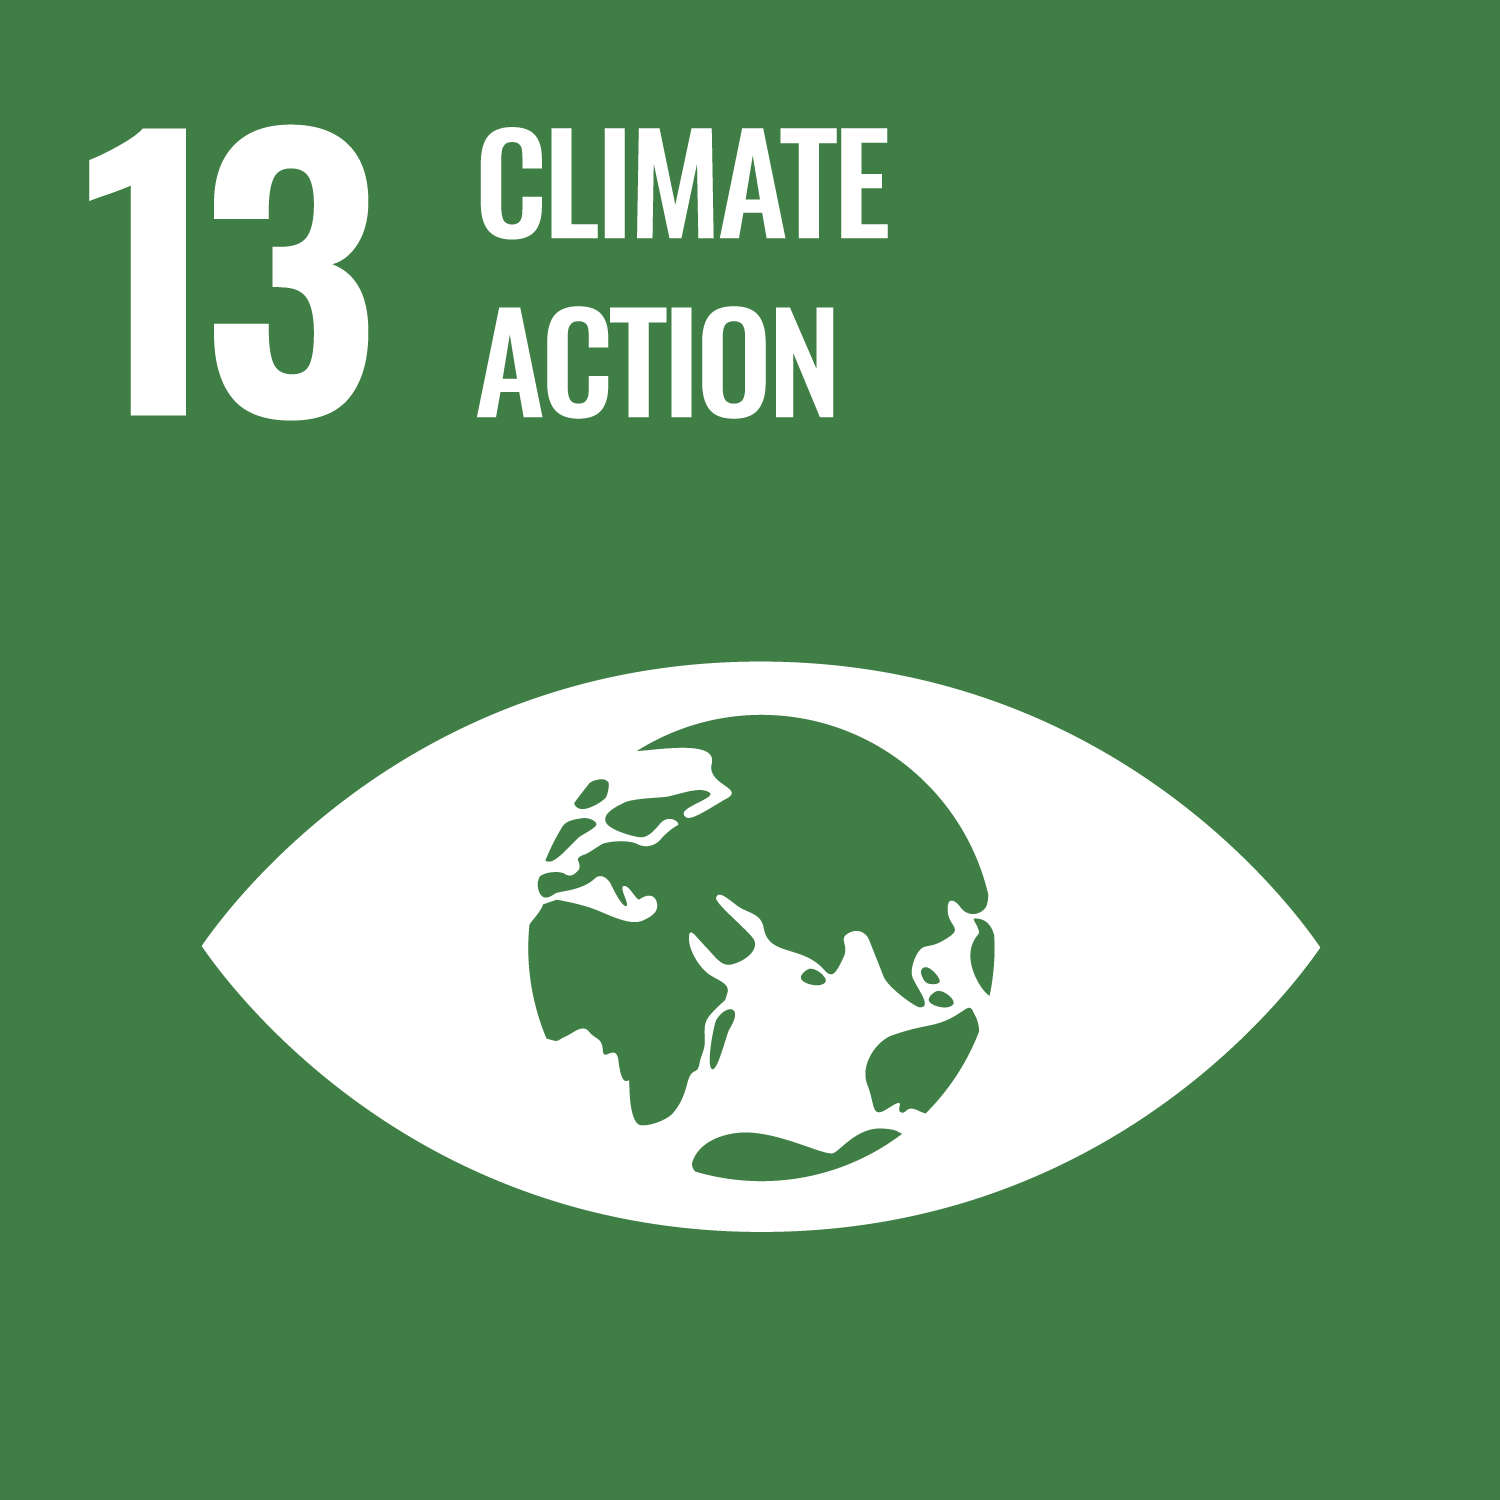 Sustainable Development Goal: SDG 13 "Climate action"